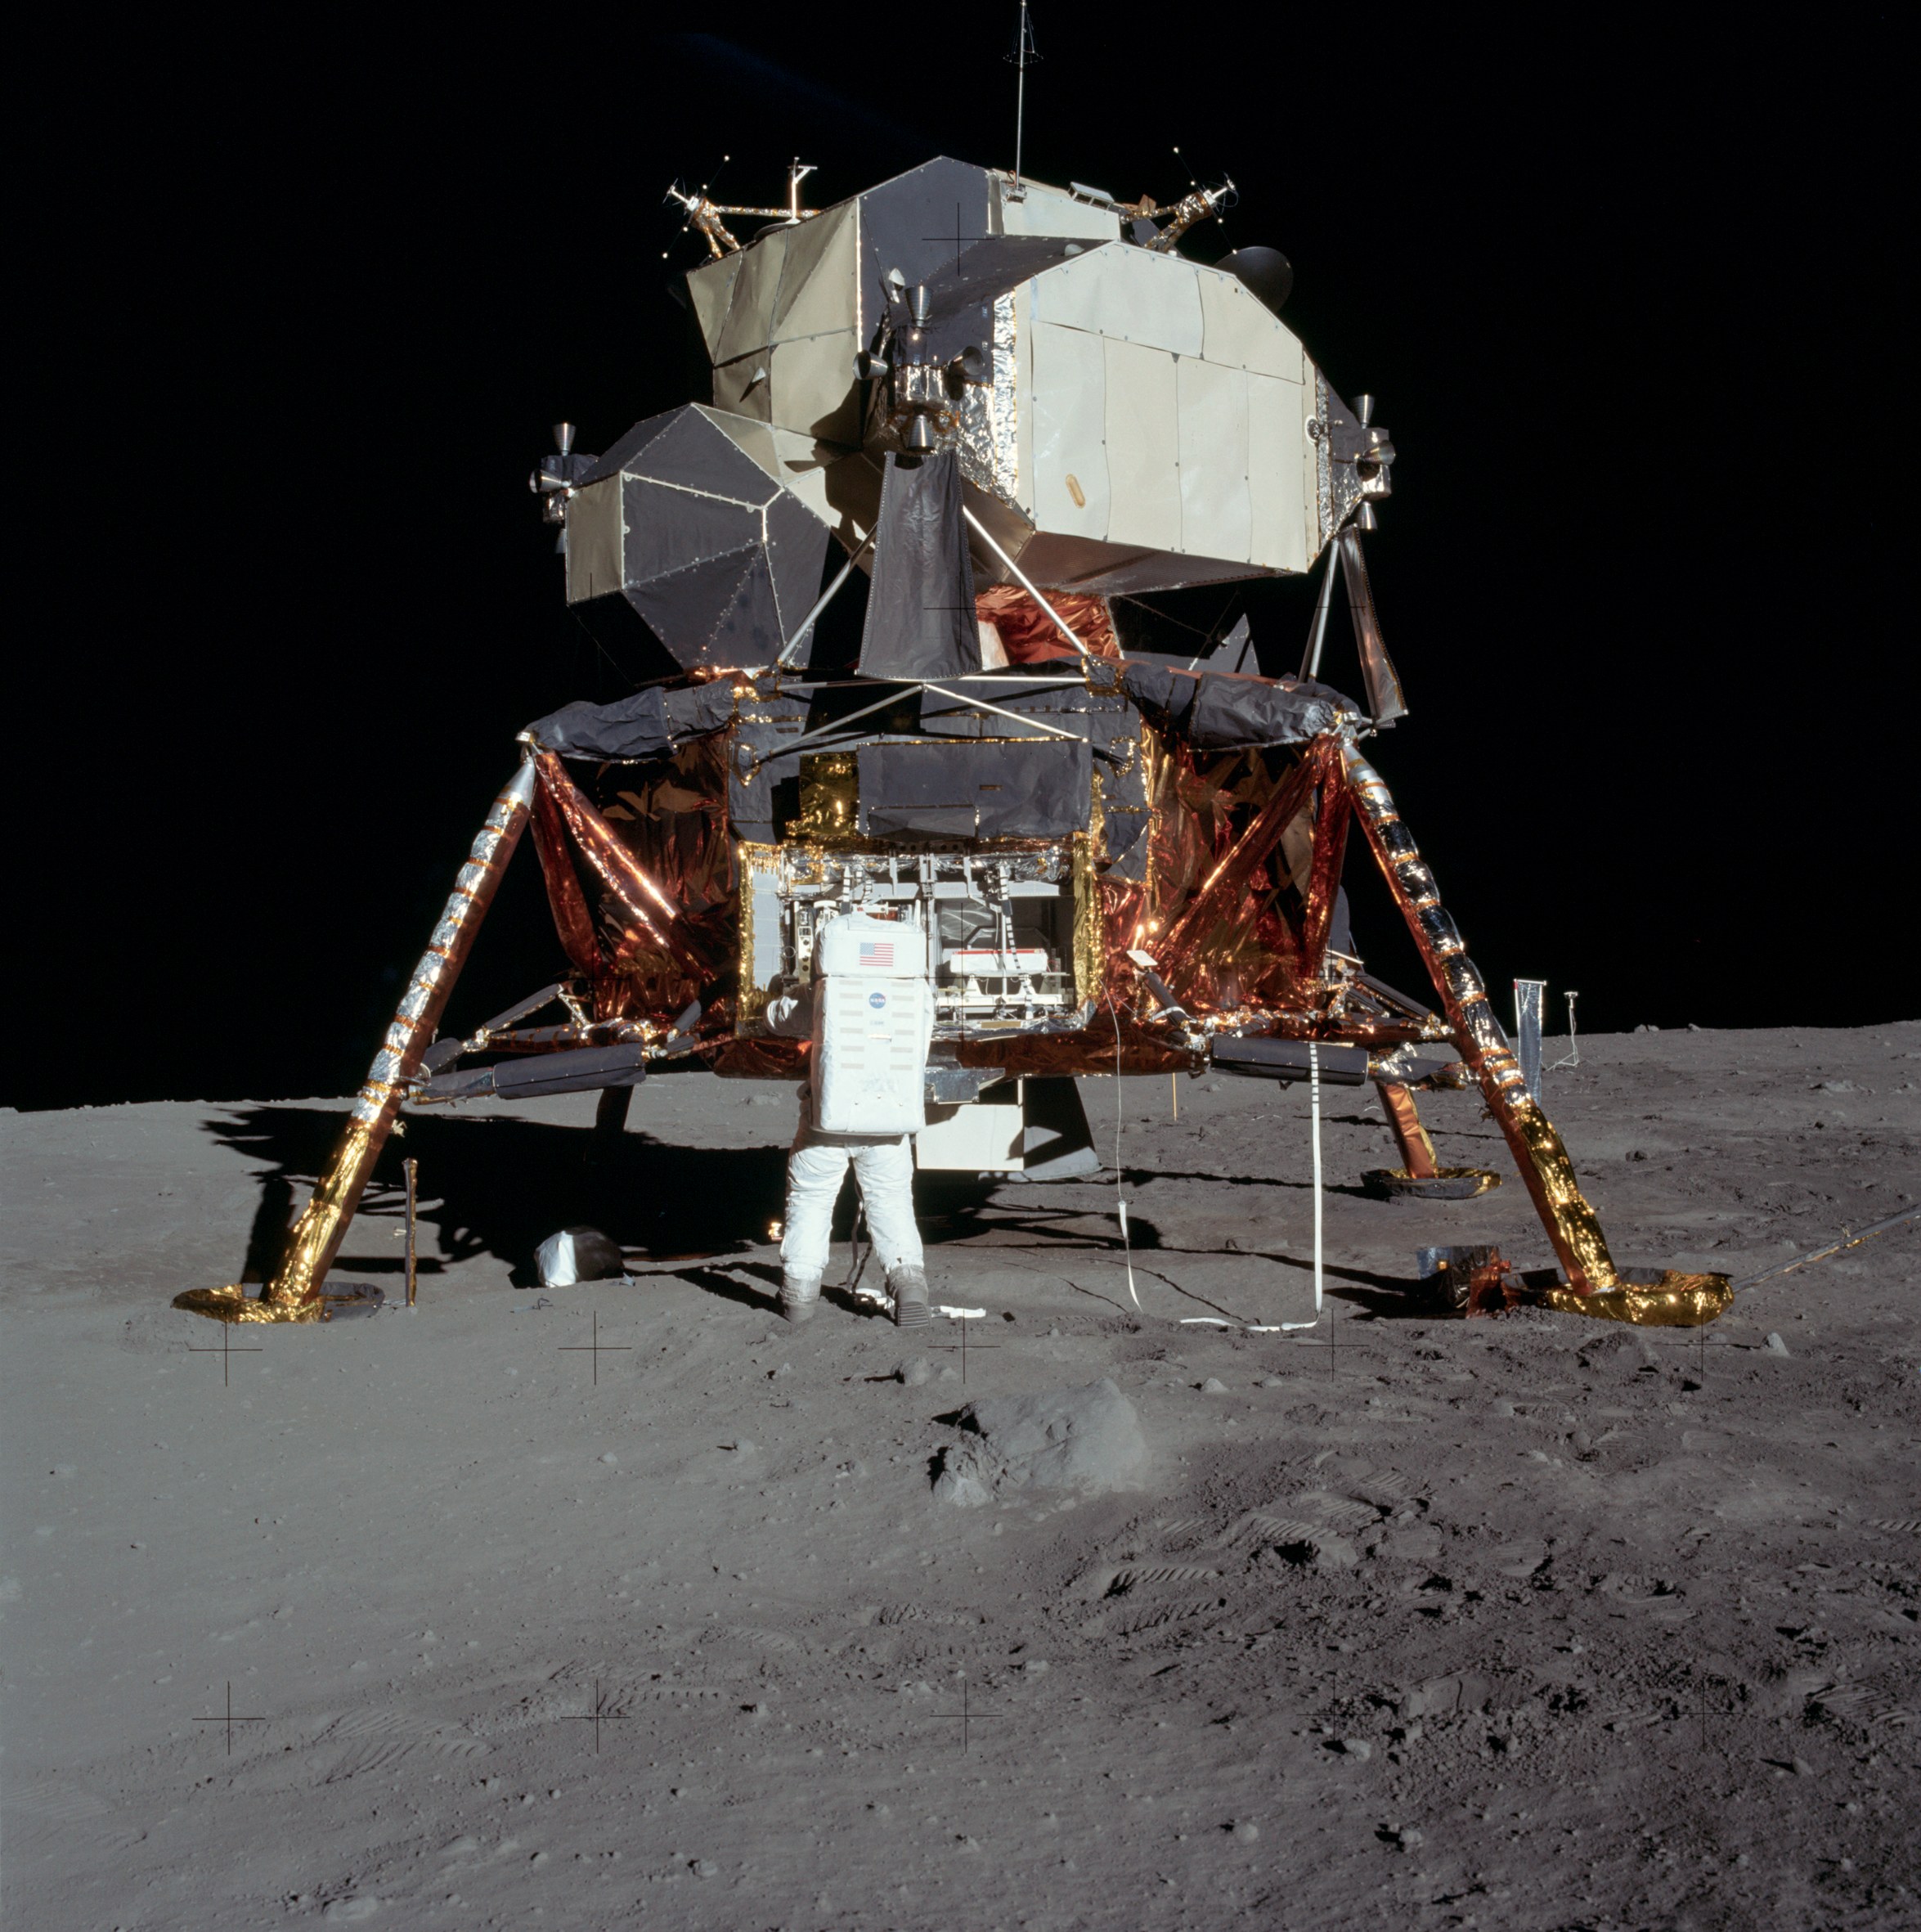 Grumman Lunar Module Apollo Program